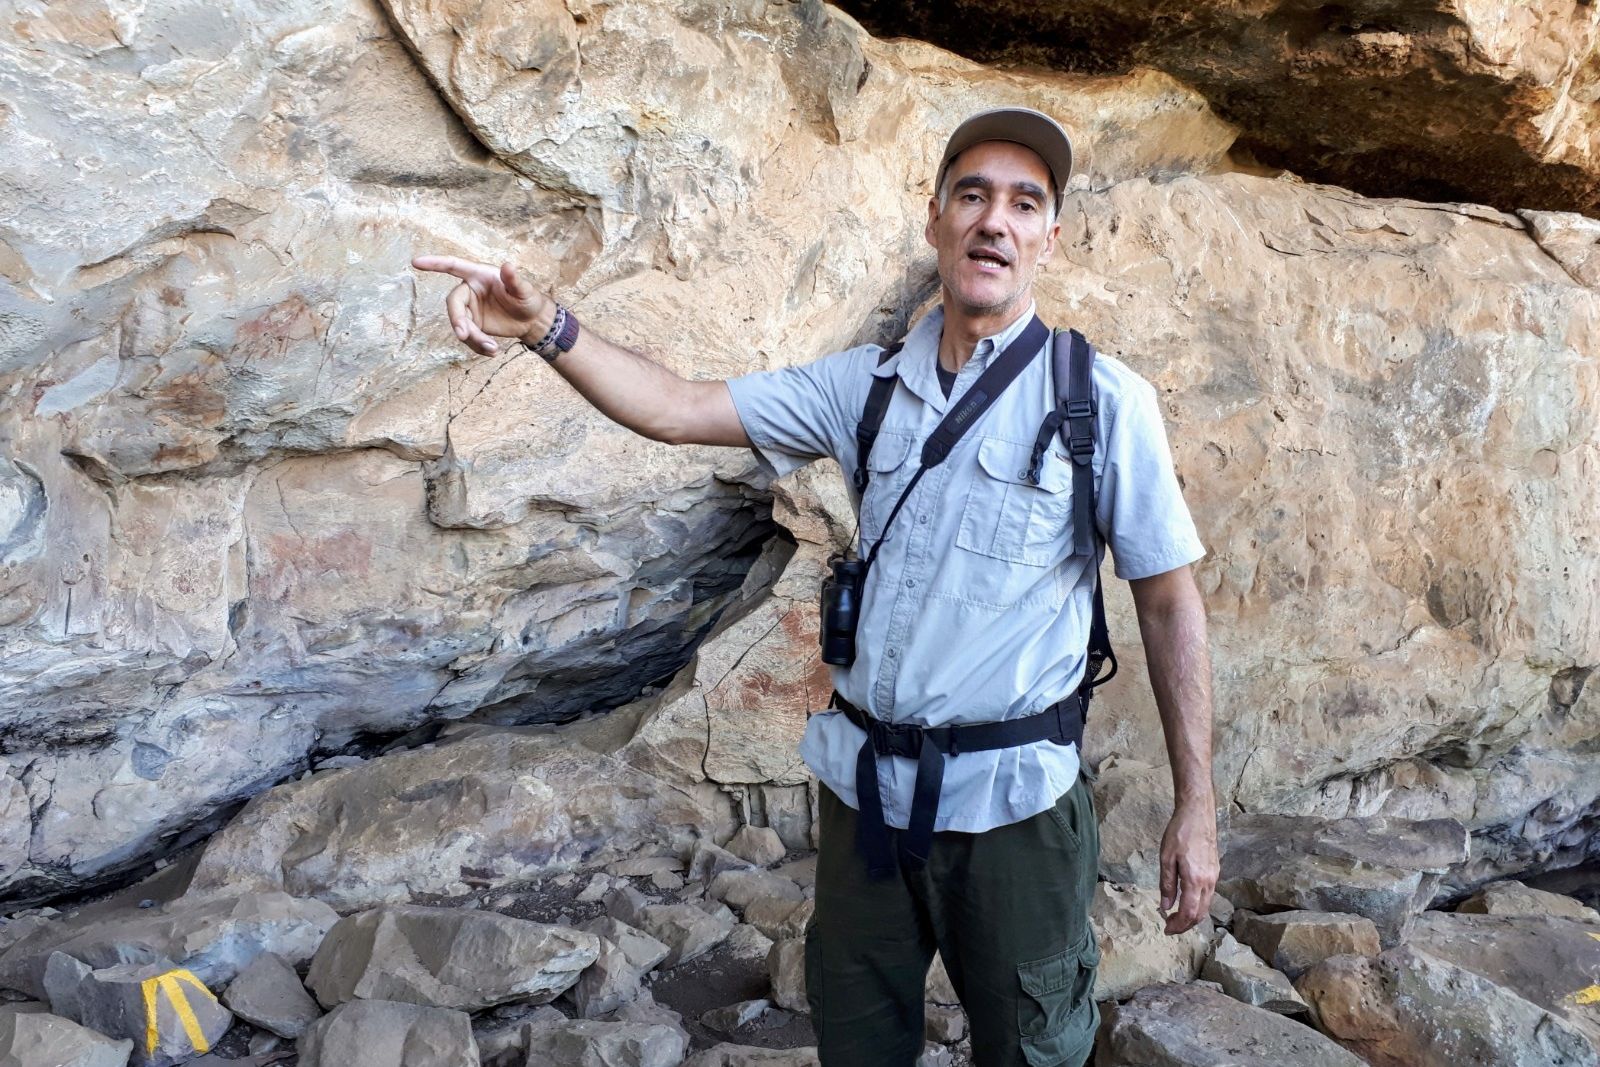 Lokaler Guide erklärt Wissenswertes zu San-Felsmalereien